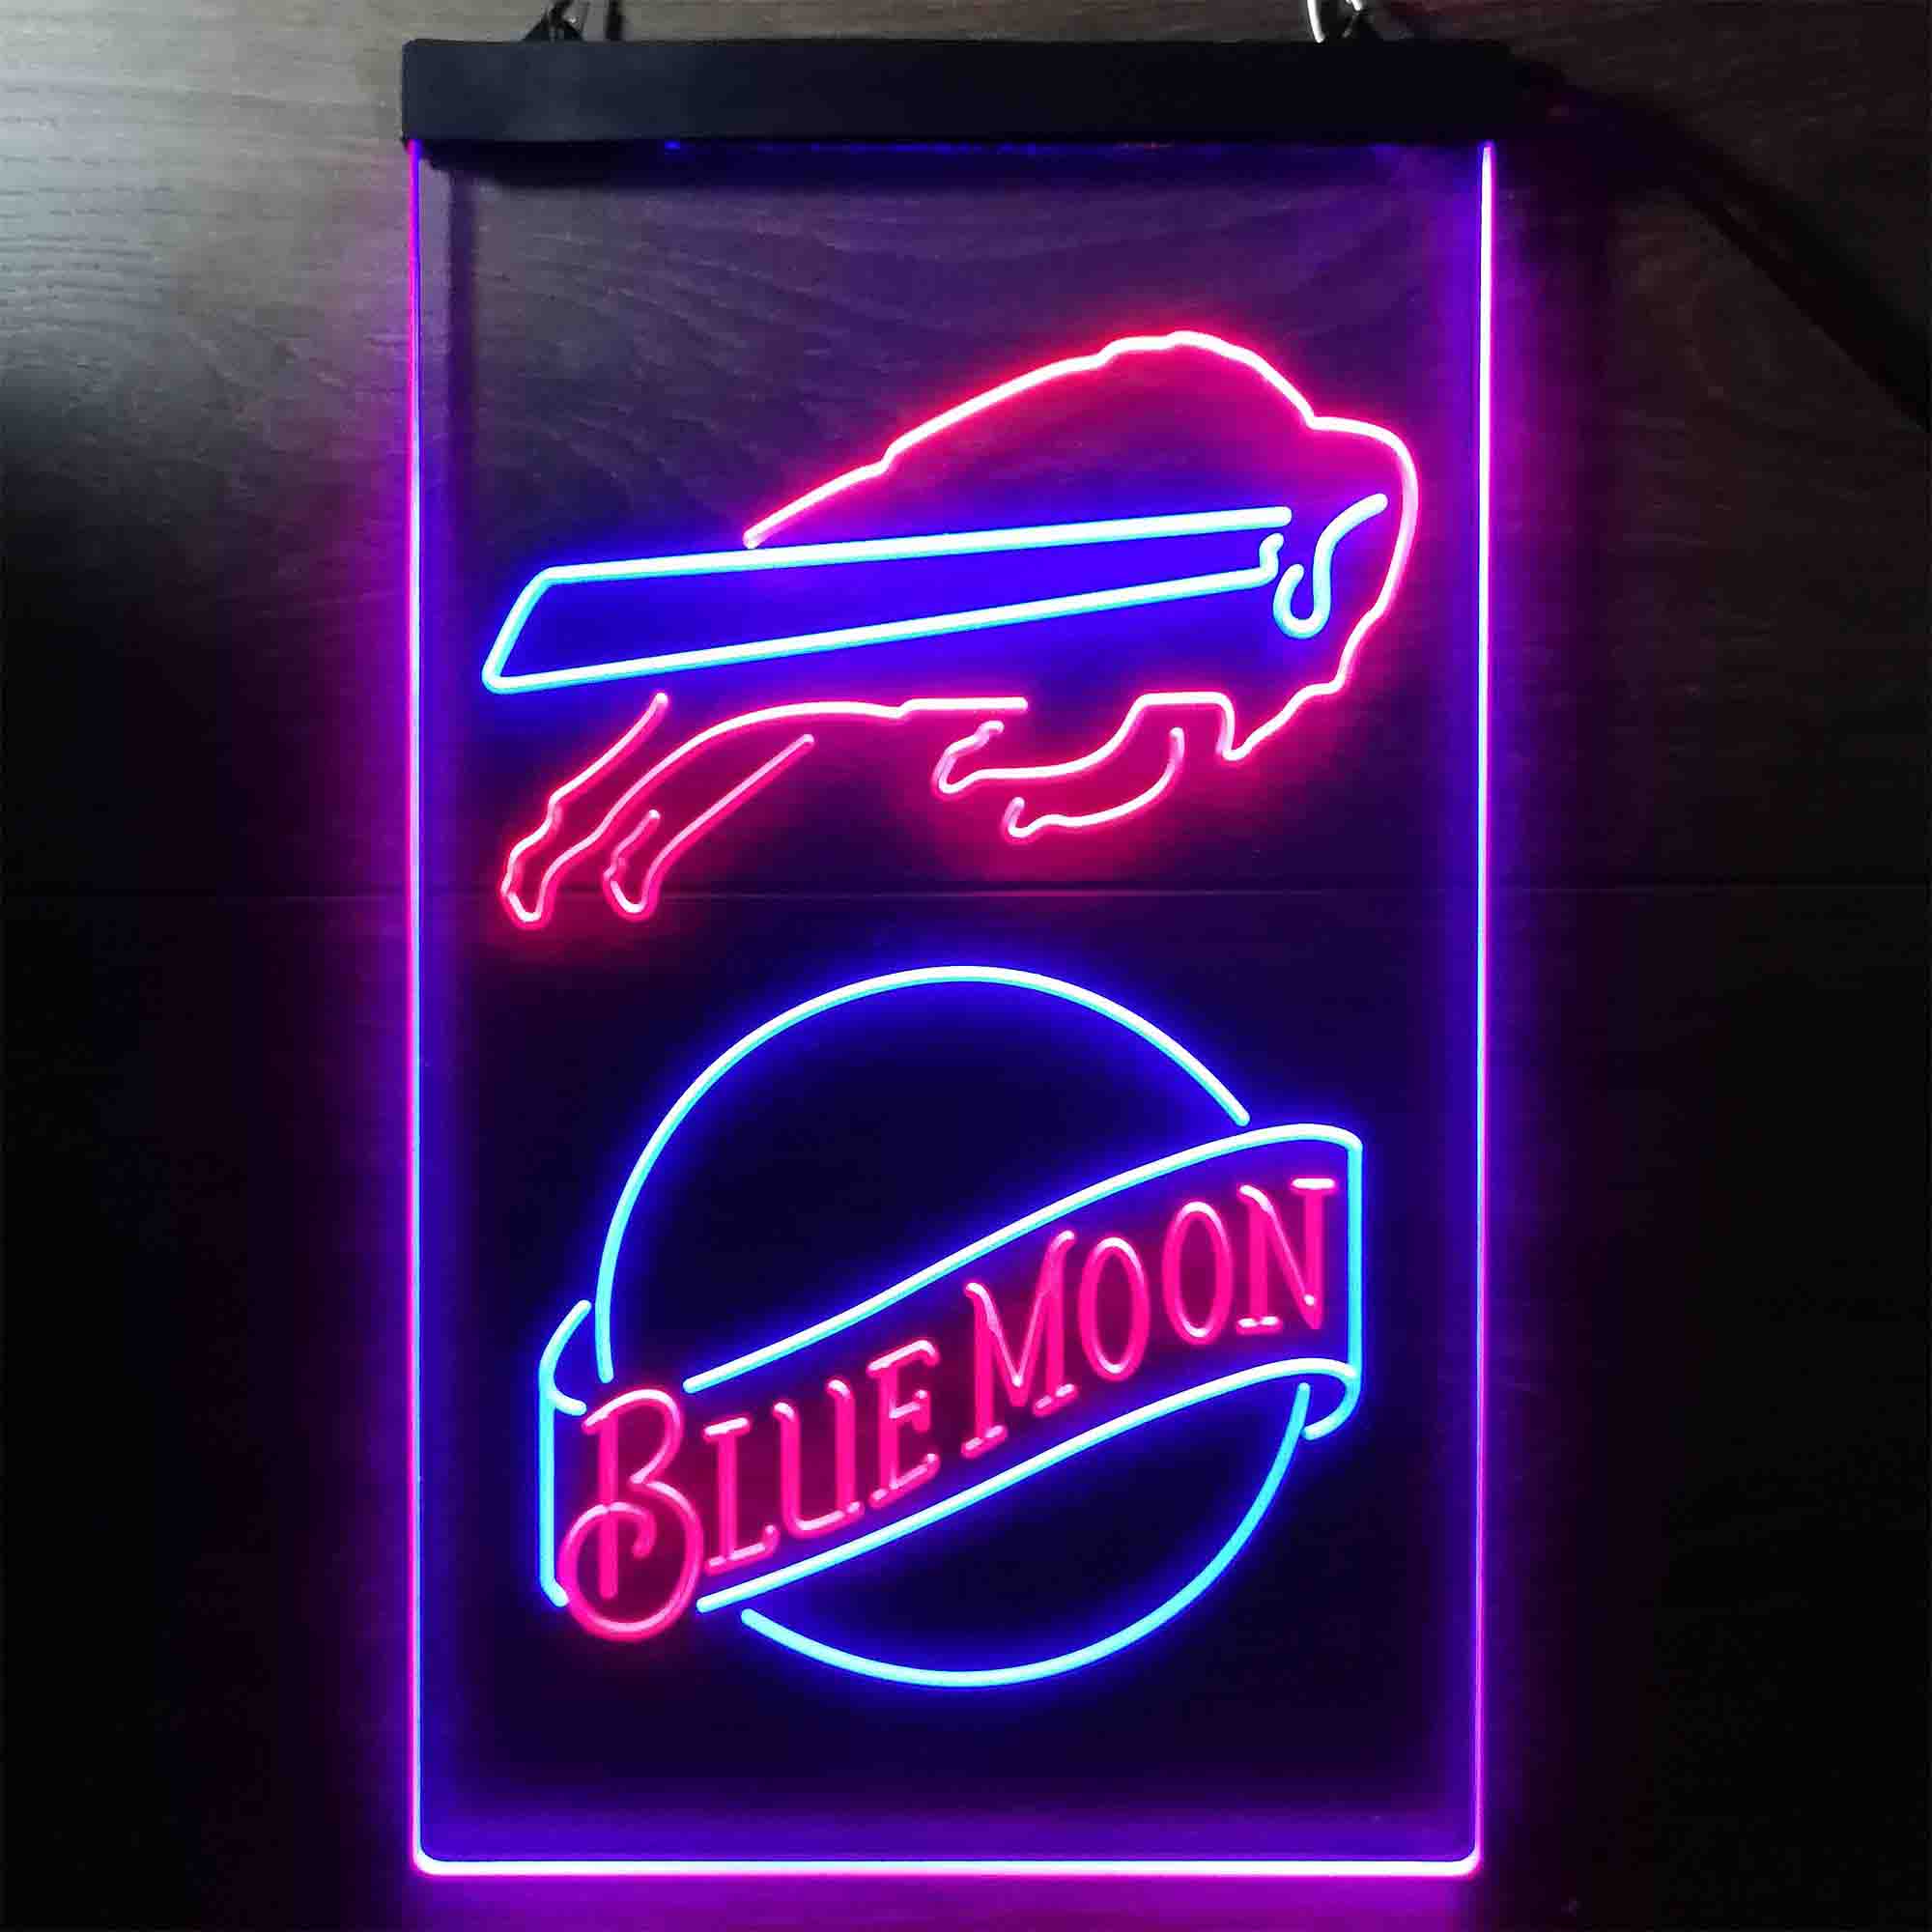 Blue Moon Bar Buffalo Bills Est. 1960 LED Neon Sign